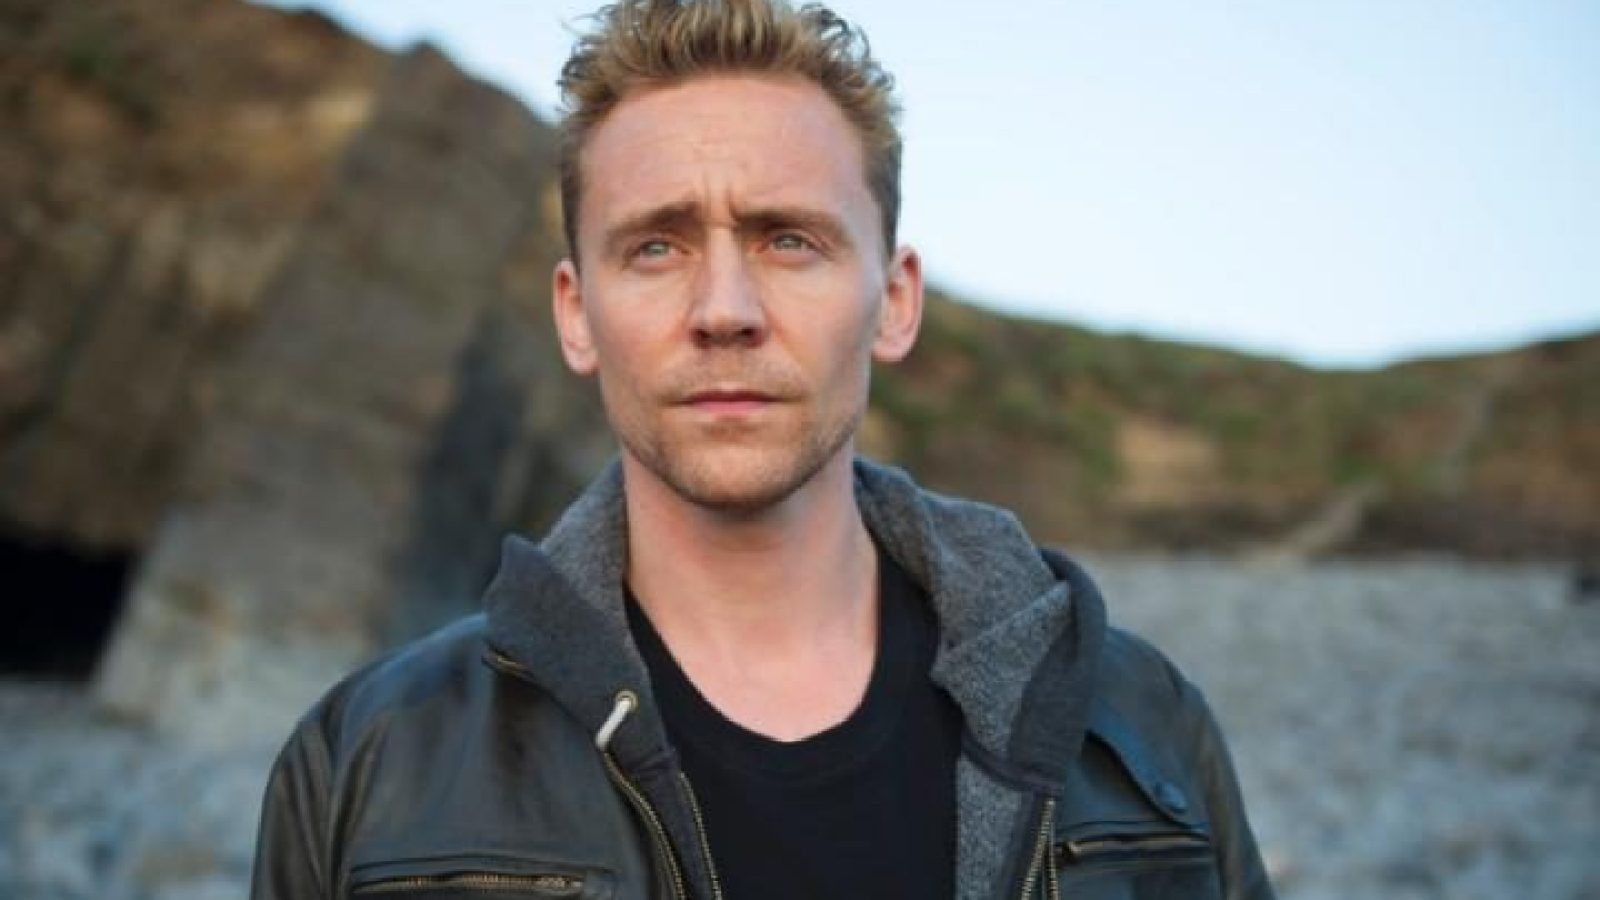 Tom Hiddleston's butt is not dangerous, according to Tom Hiddleston ...